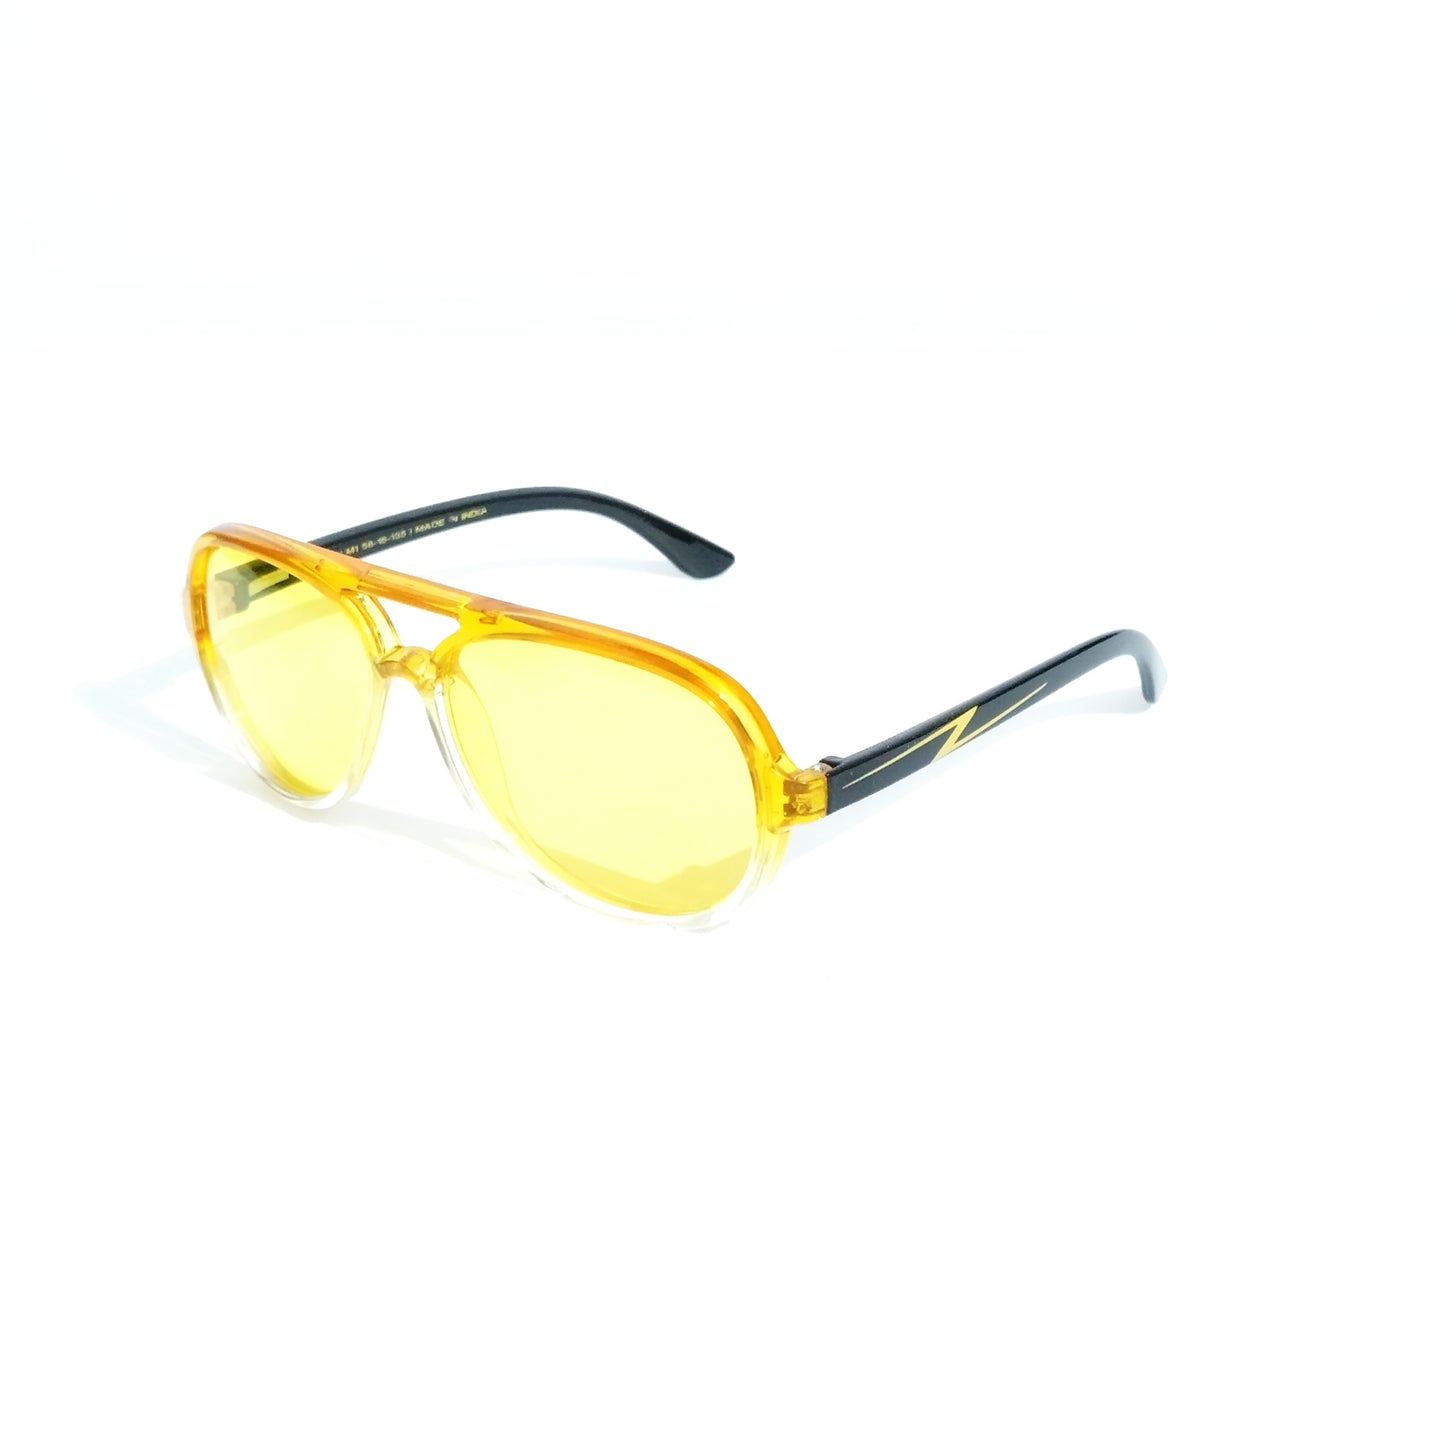 Unisex Polarized Driving Sports Sunglasses yellow lens